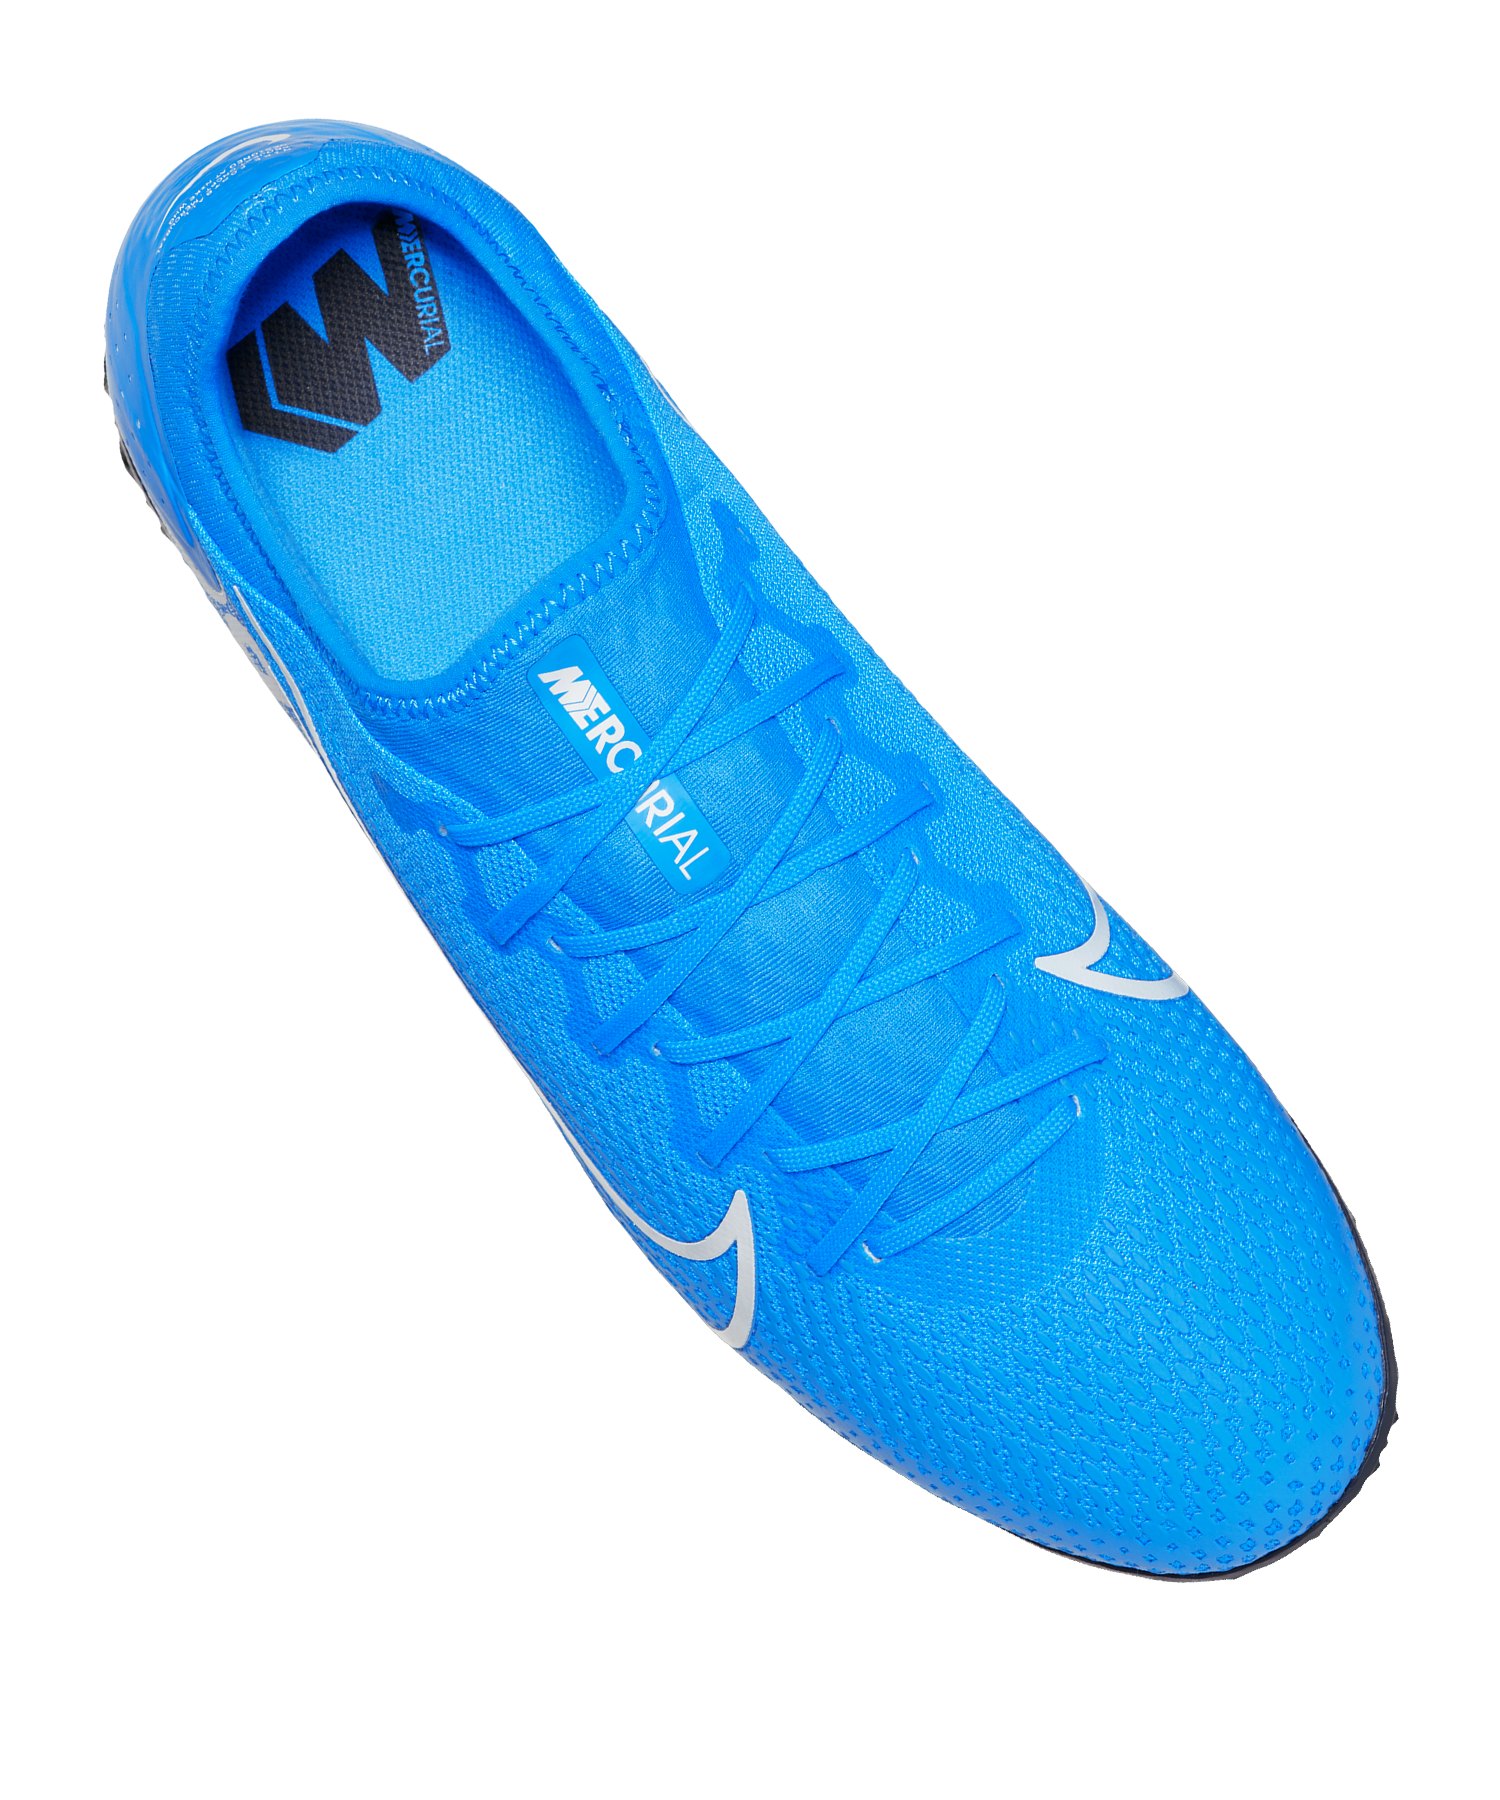 Nike Mercurial Vapor 13 Pro IC Men 's Fussballschuh Galaxus